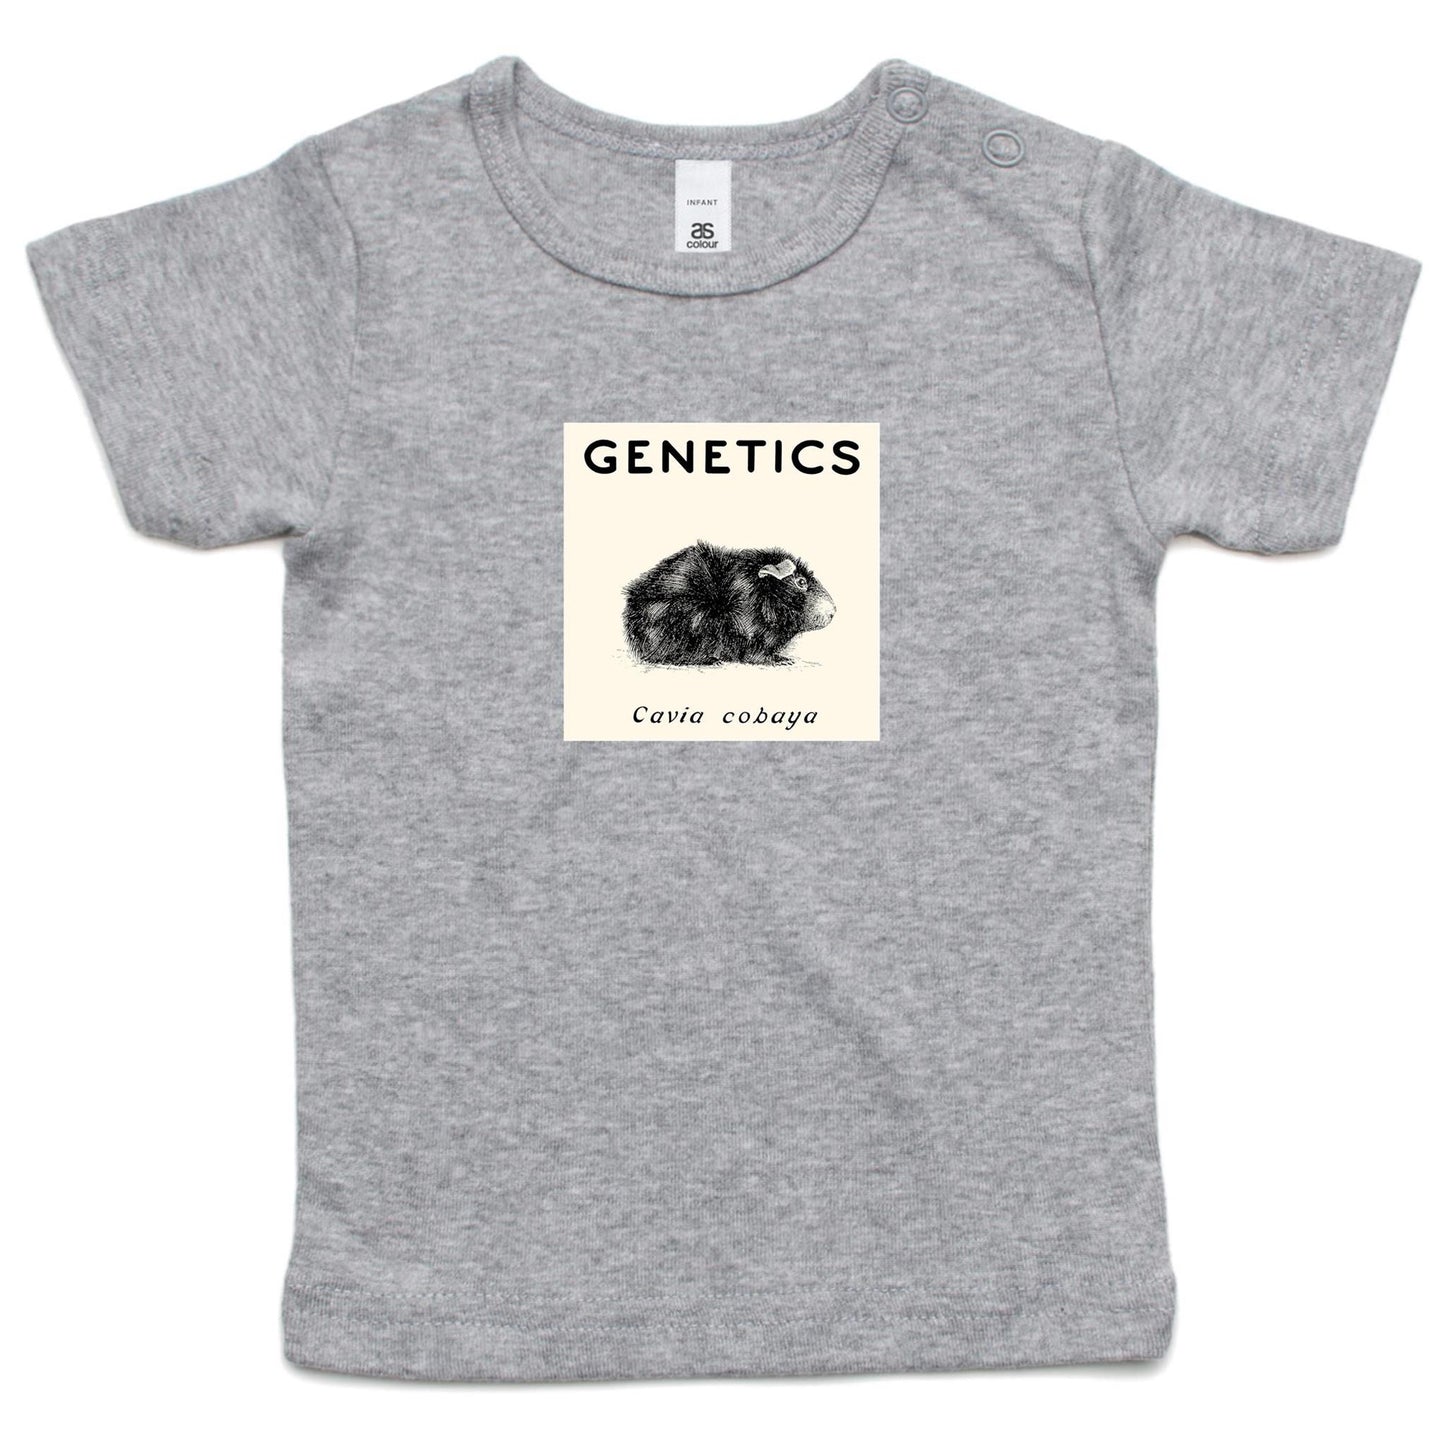 Genetics T Shirts for Babies